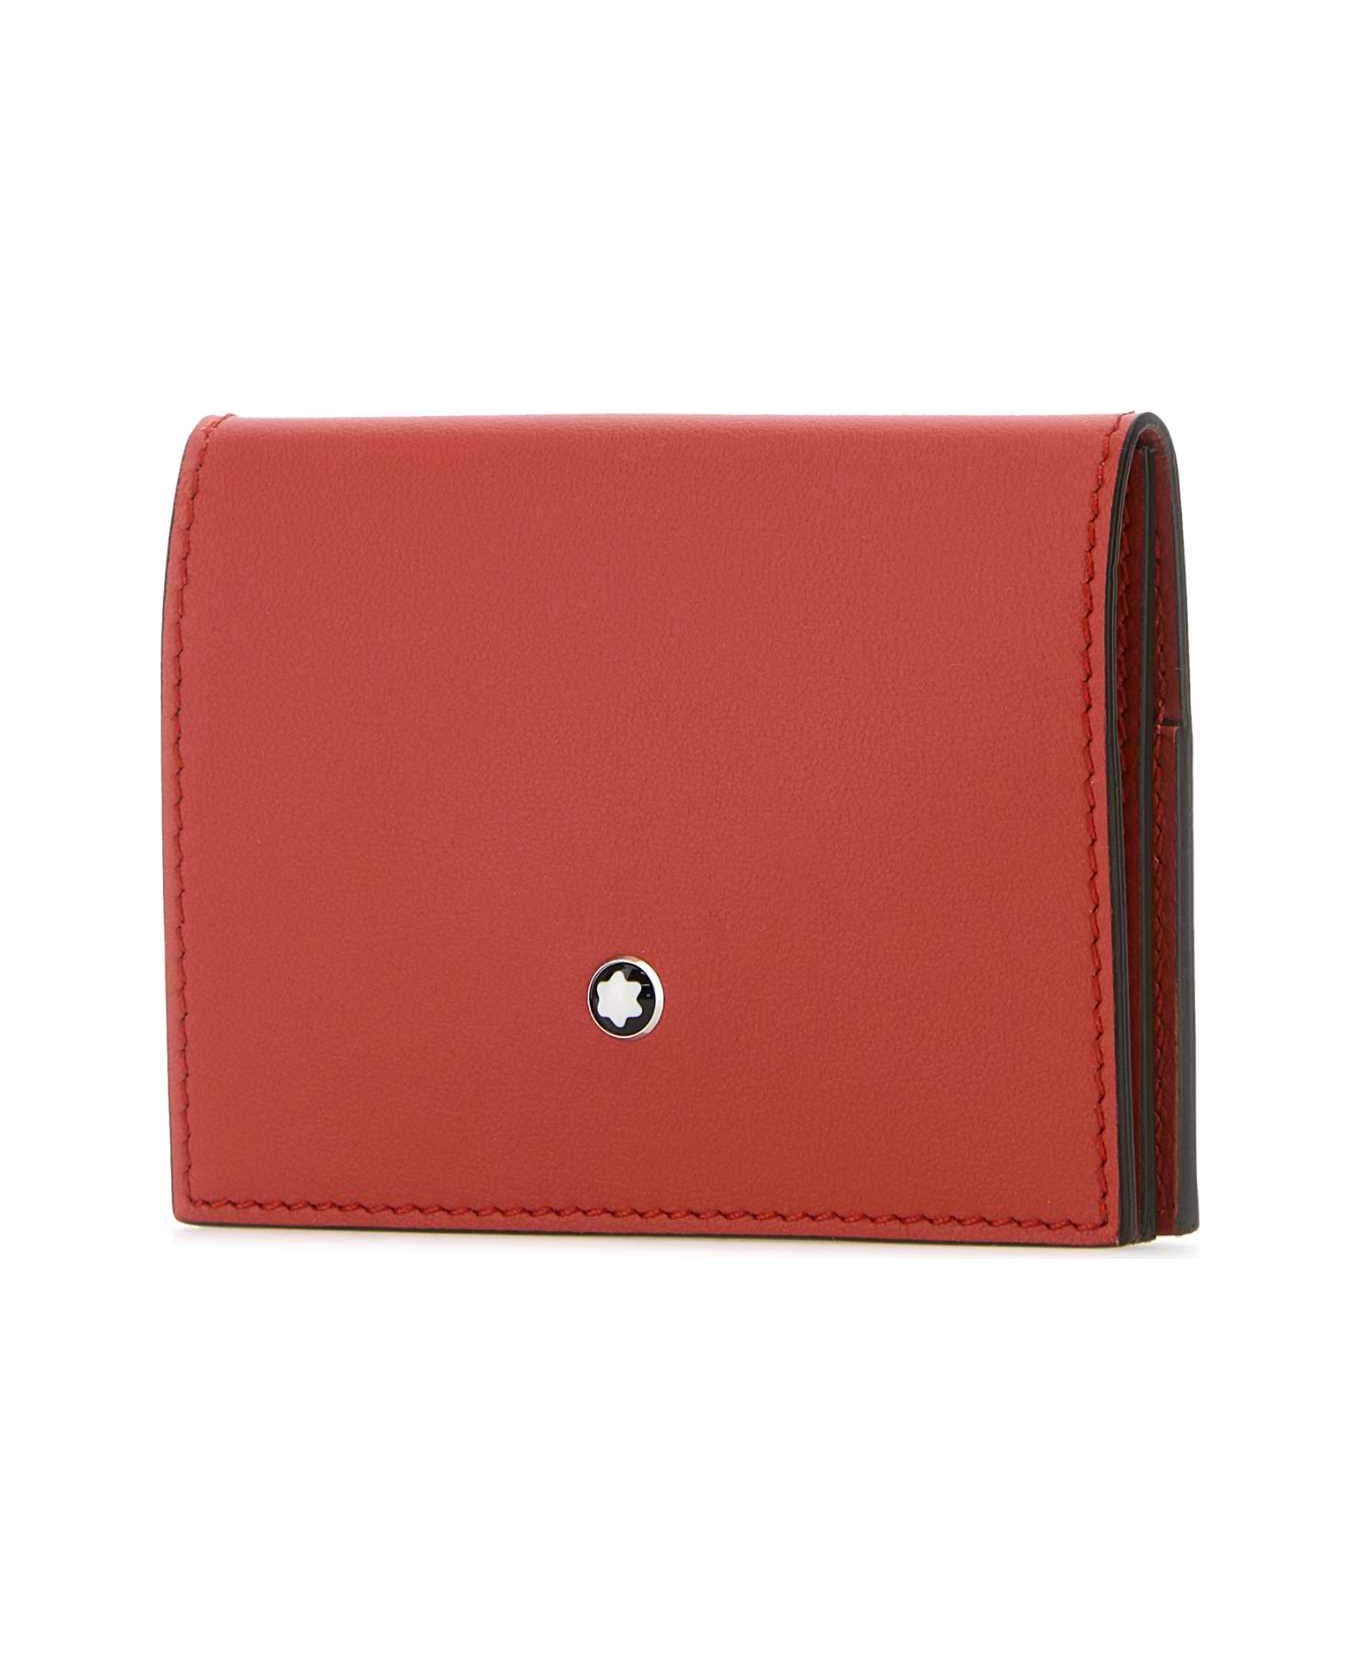 Montblanc Red Leather Card Holder - BLACK